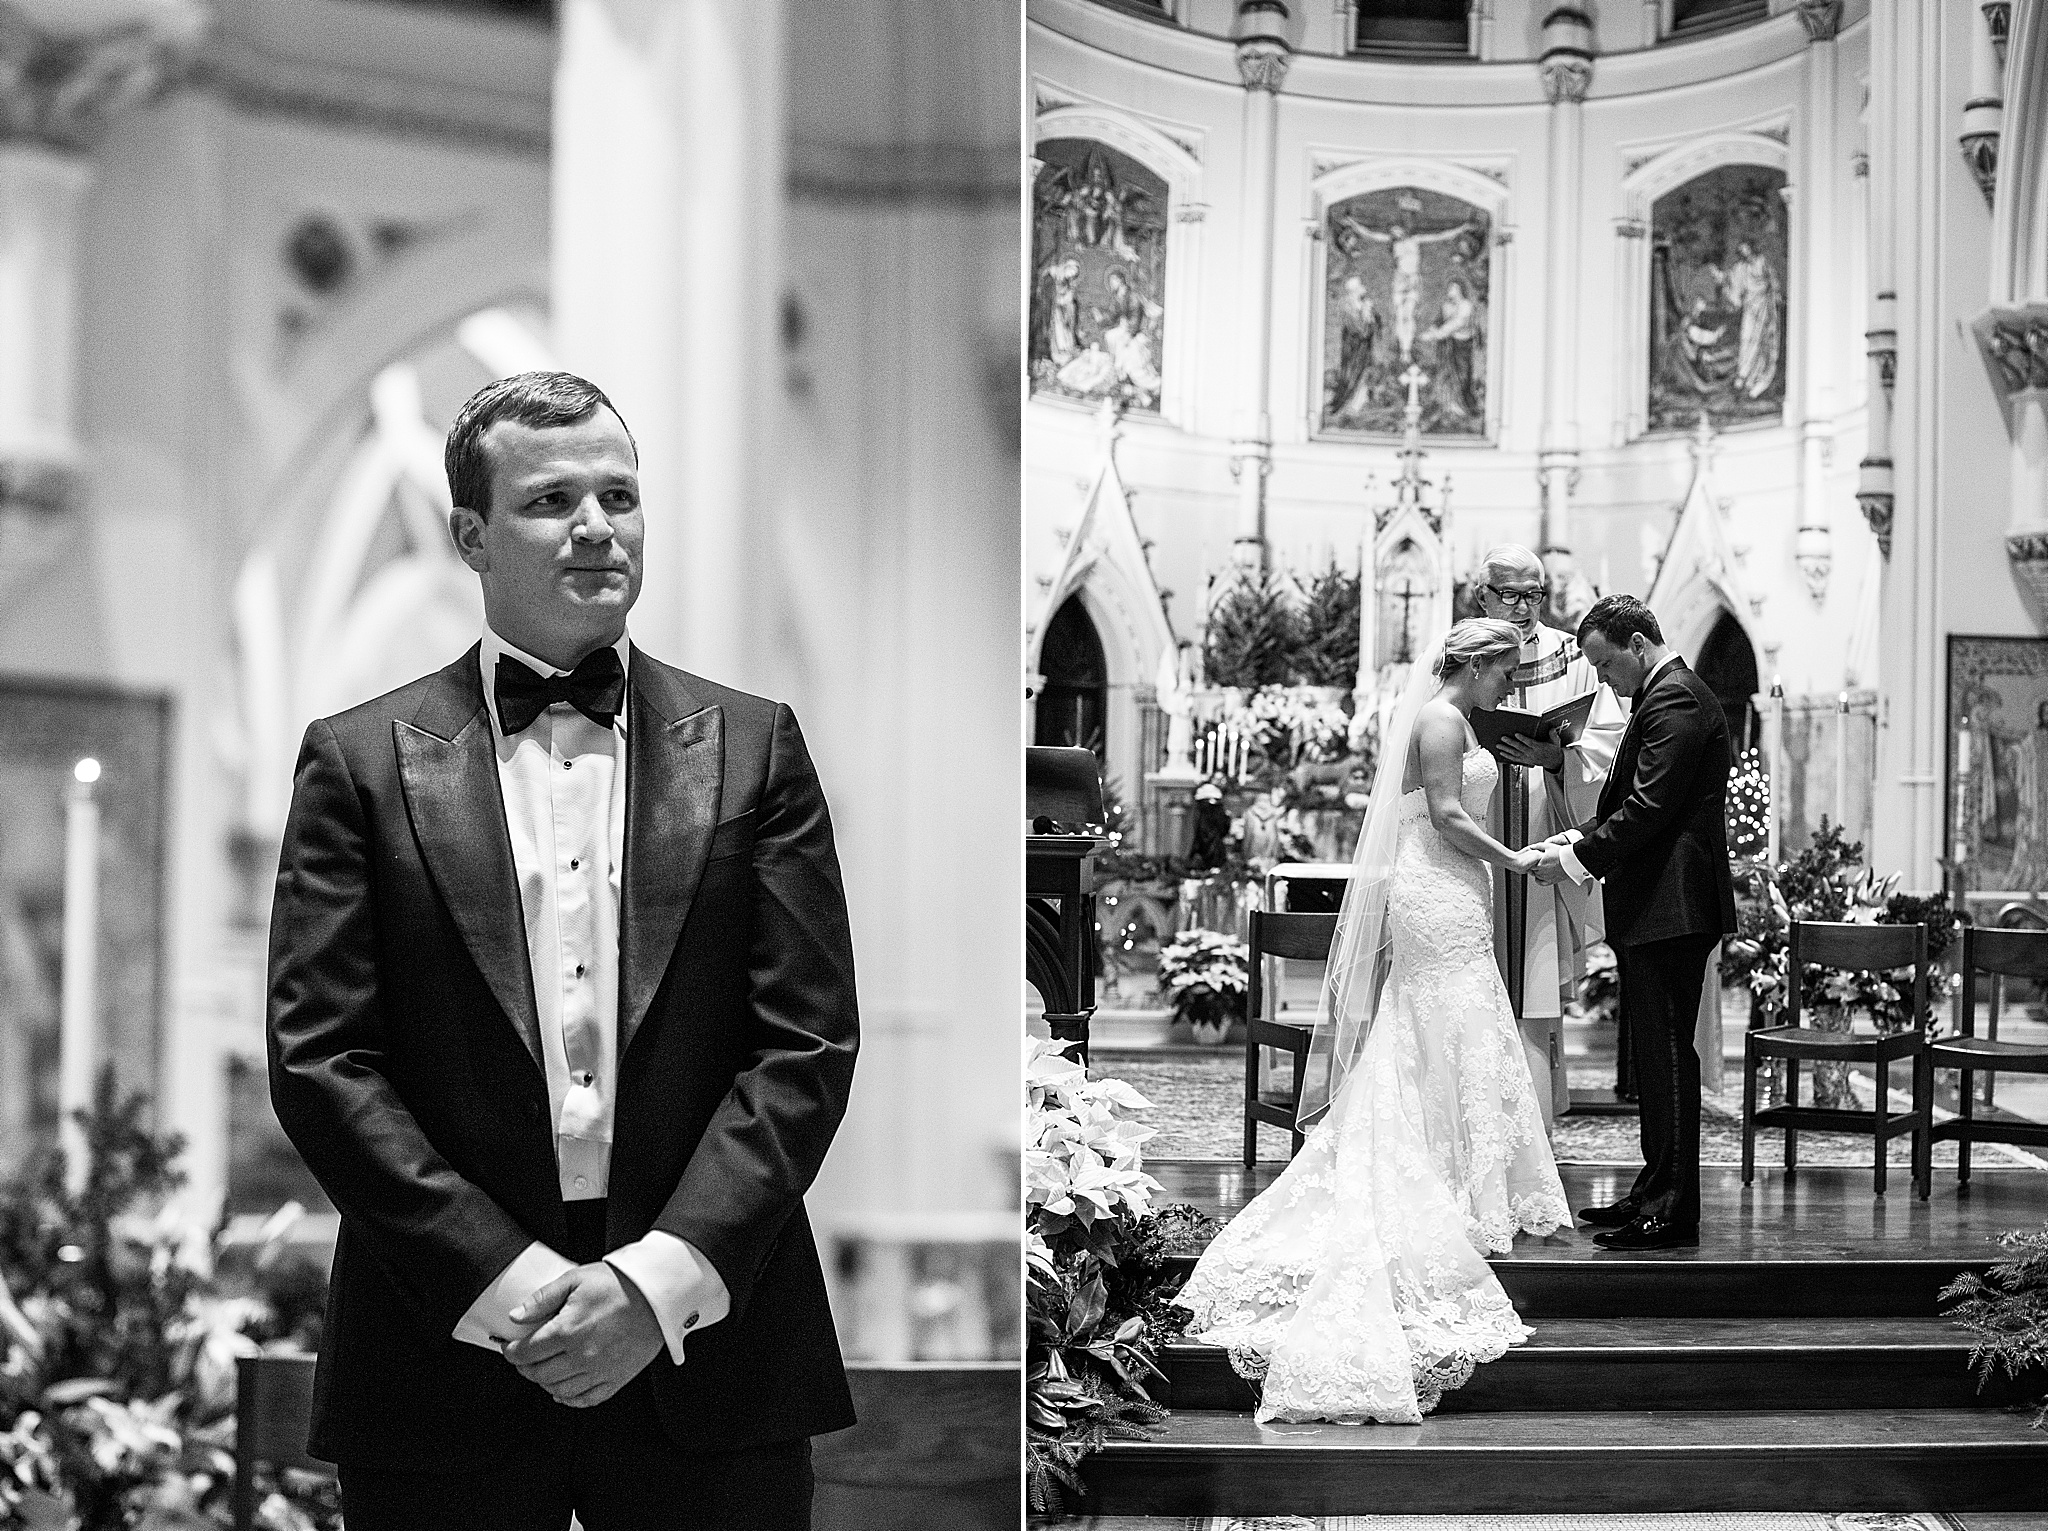 Corpus Christi wedding ceremony photographed by Alexandra Mandato Photography